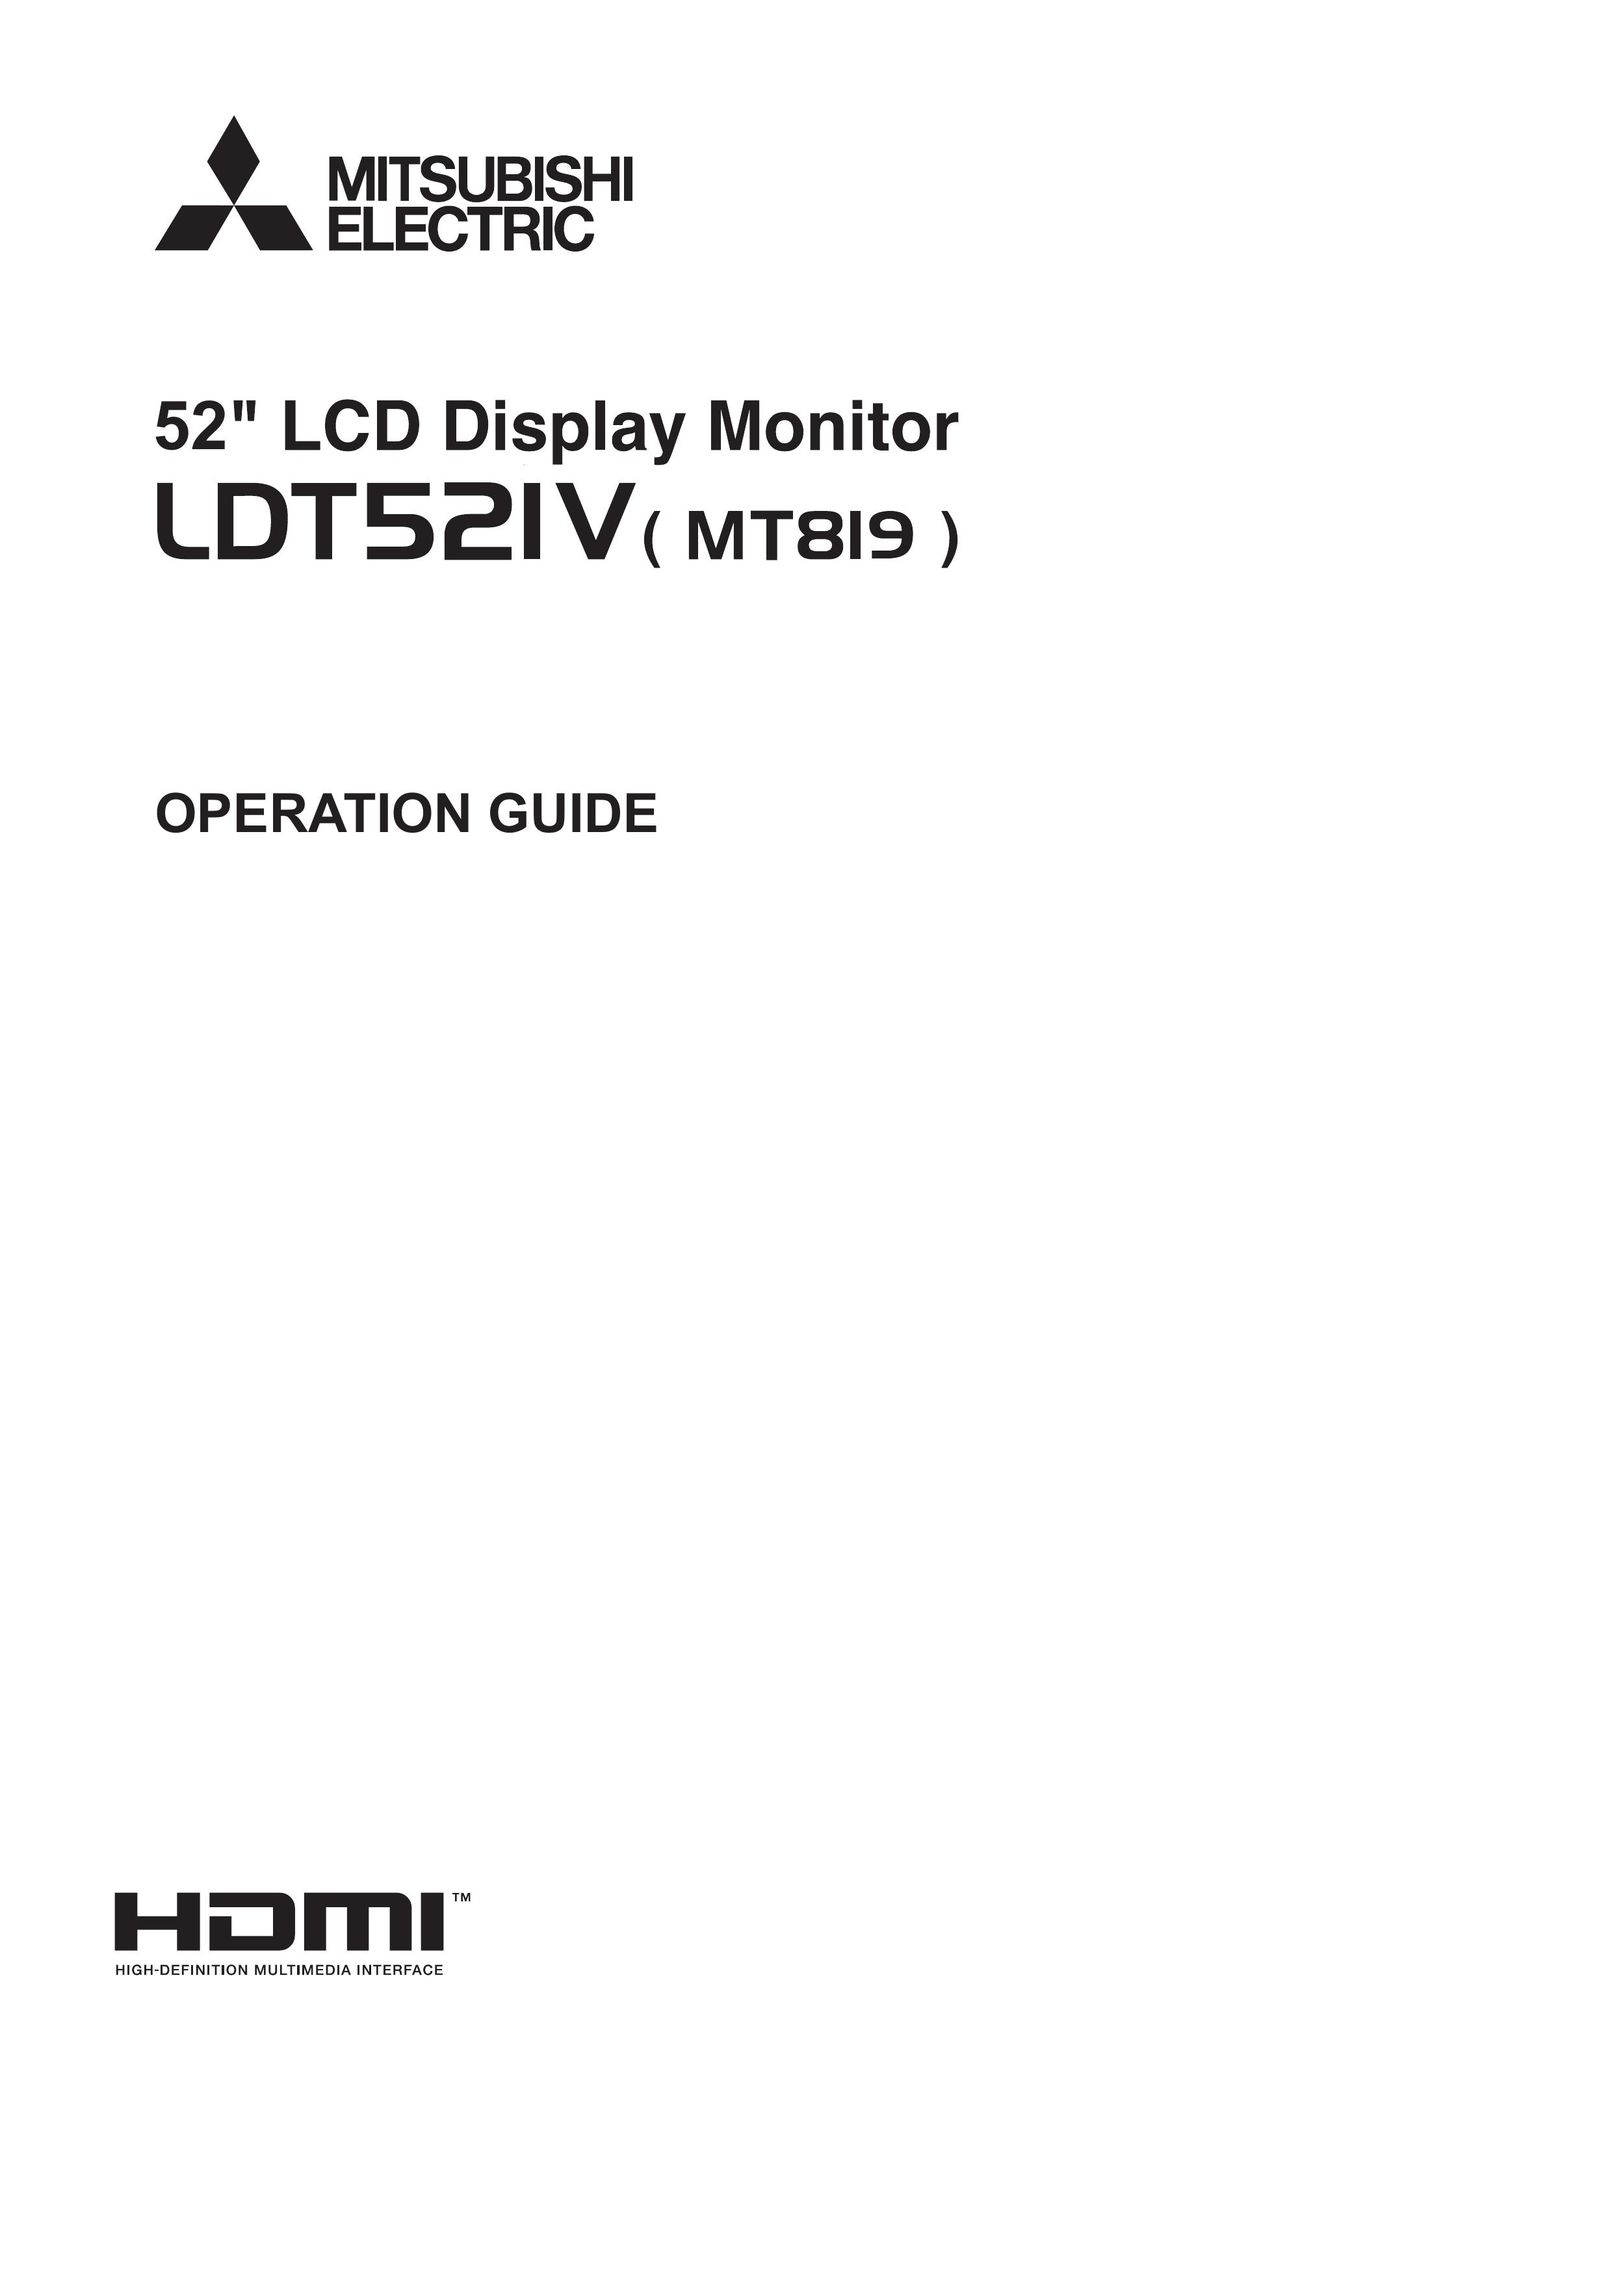 Mitsubishi Electronics MT819 Computer Monitor User Manual